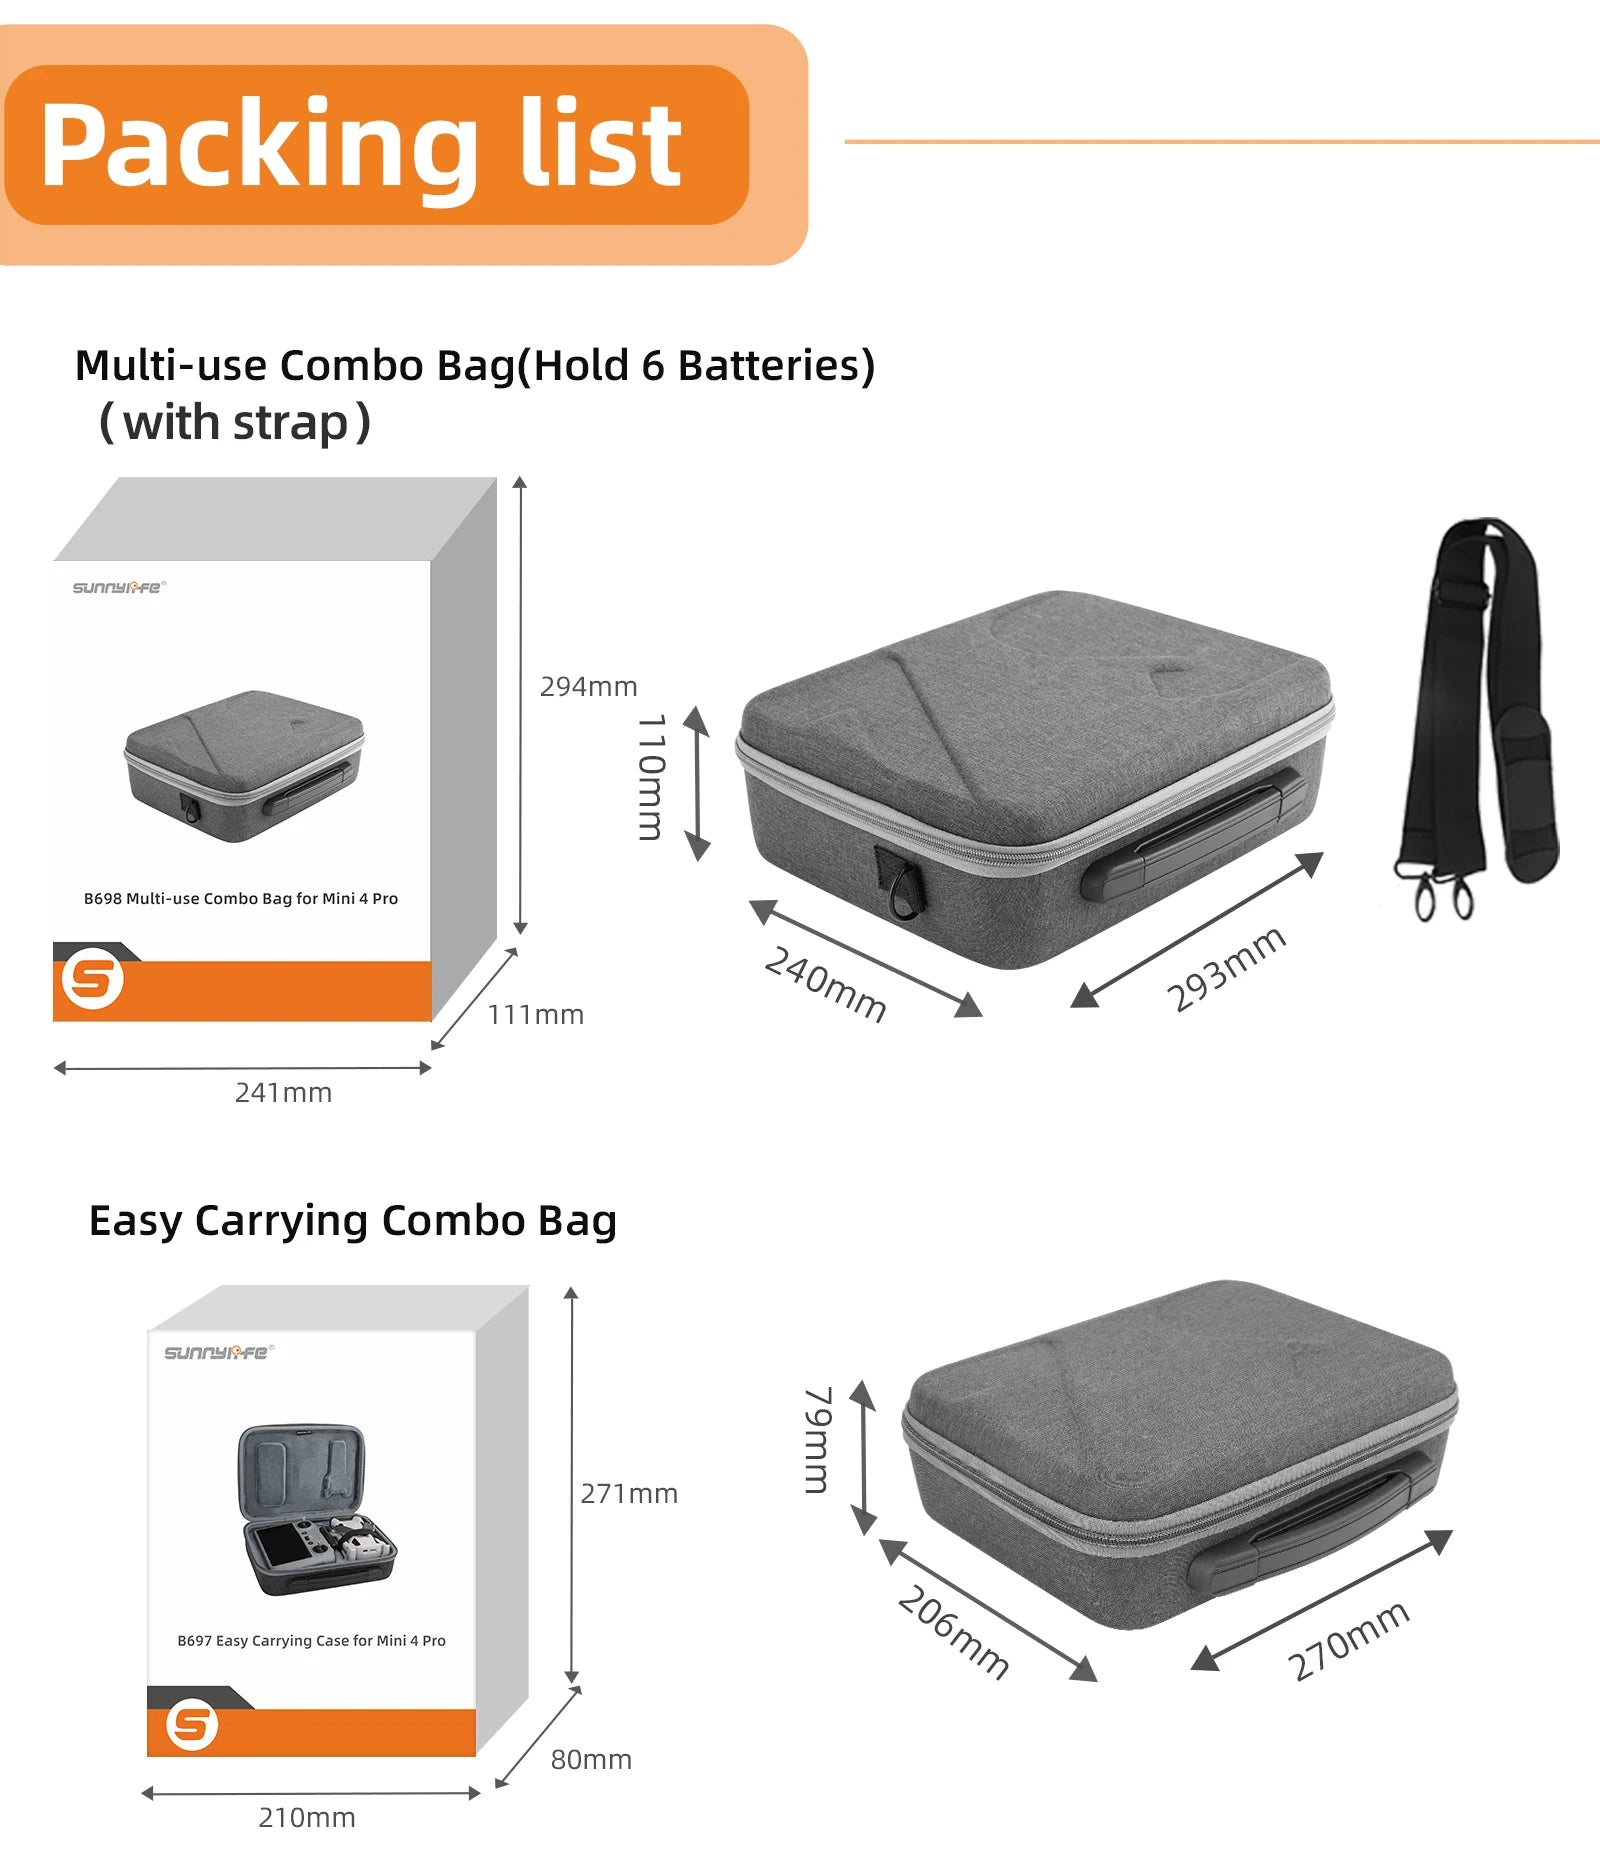 Portable Carrying Case For DJI Mini 4 Pro, 294mm 7 B698 Multi-use Combo Bag(Hold 6 Batteries